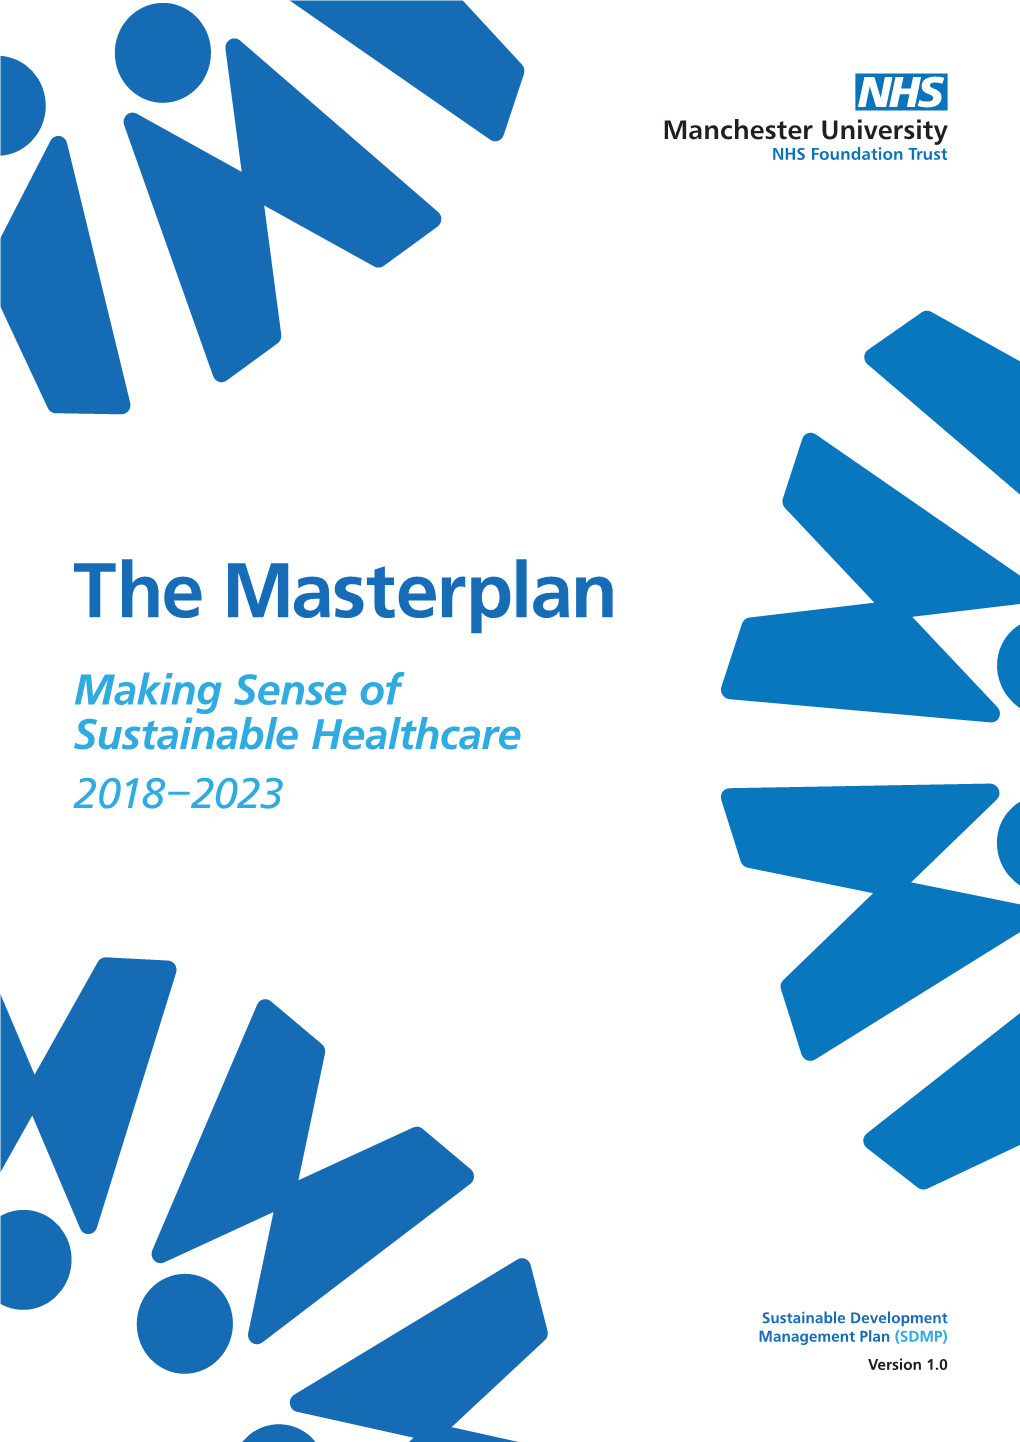 The Masterplan (2018-2023)